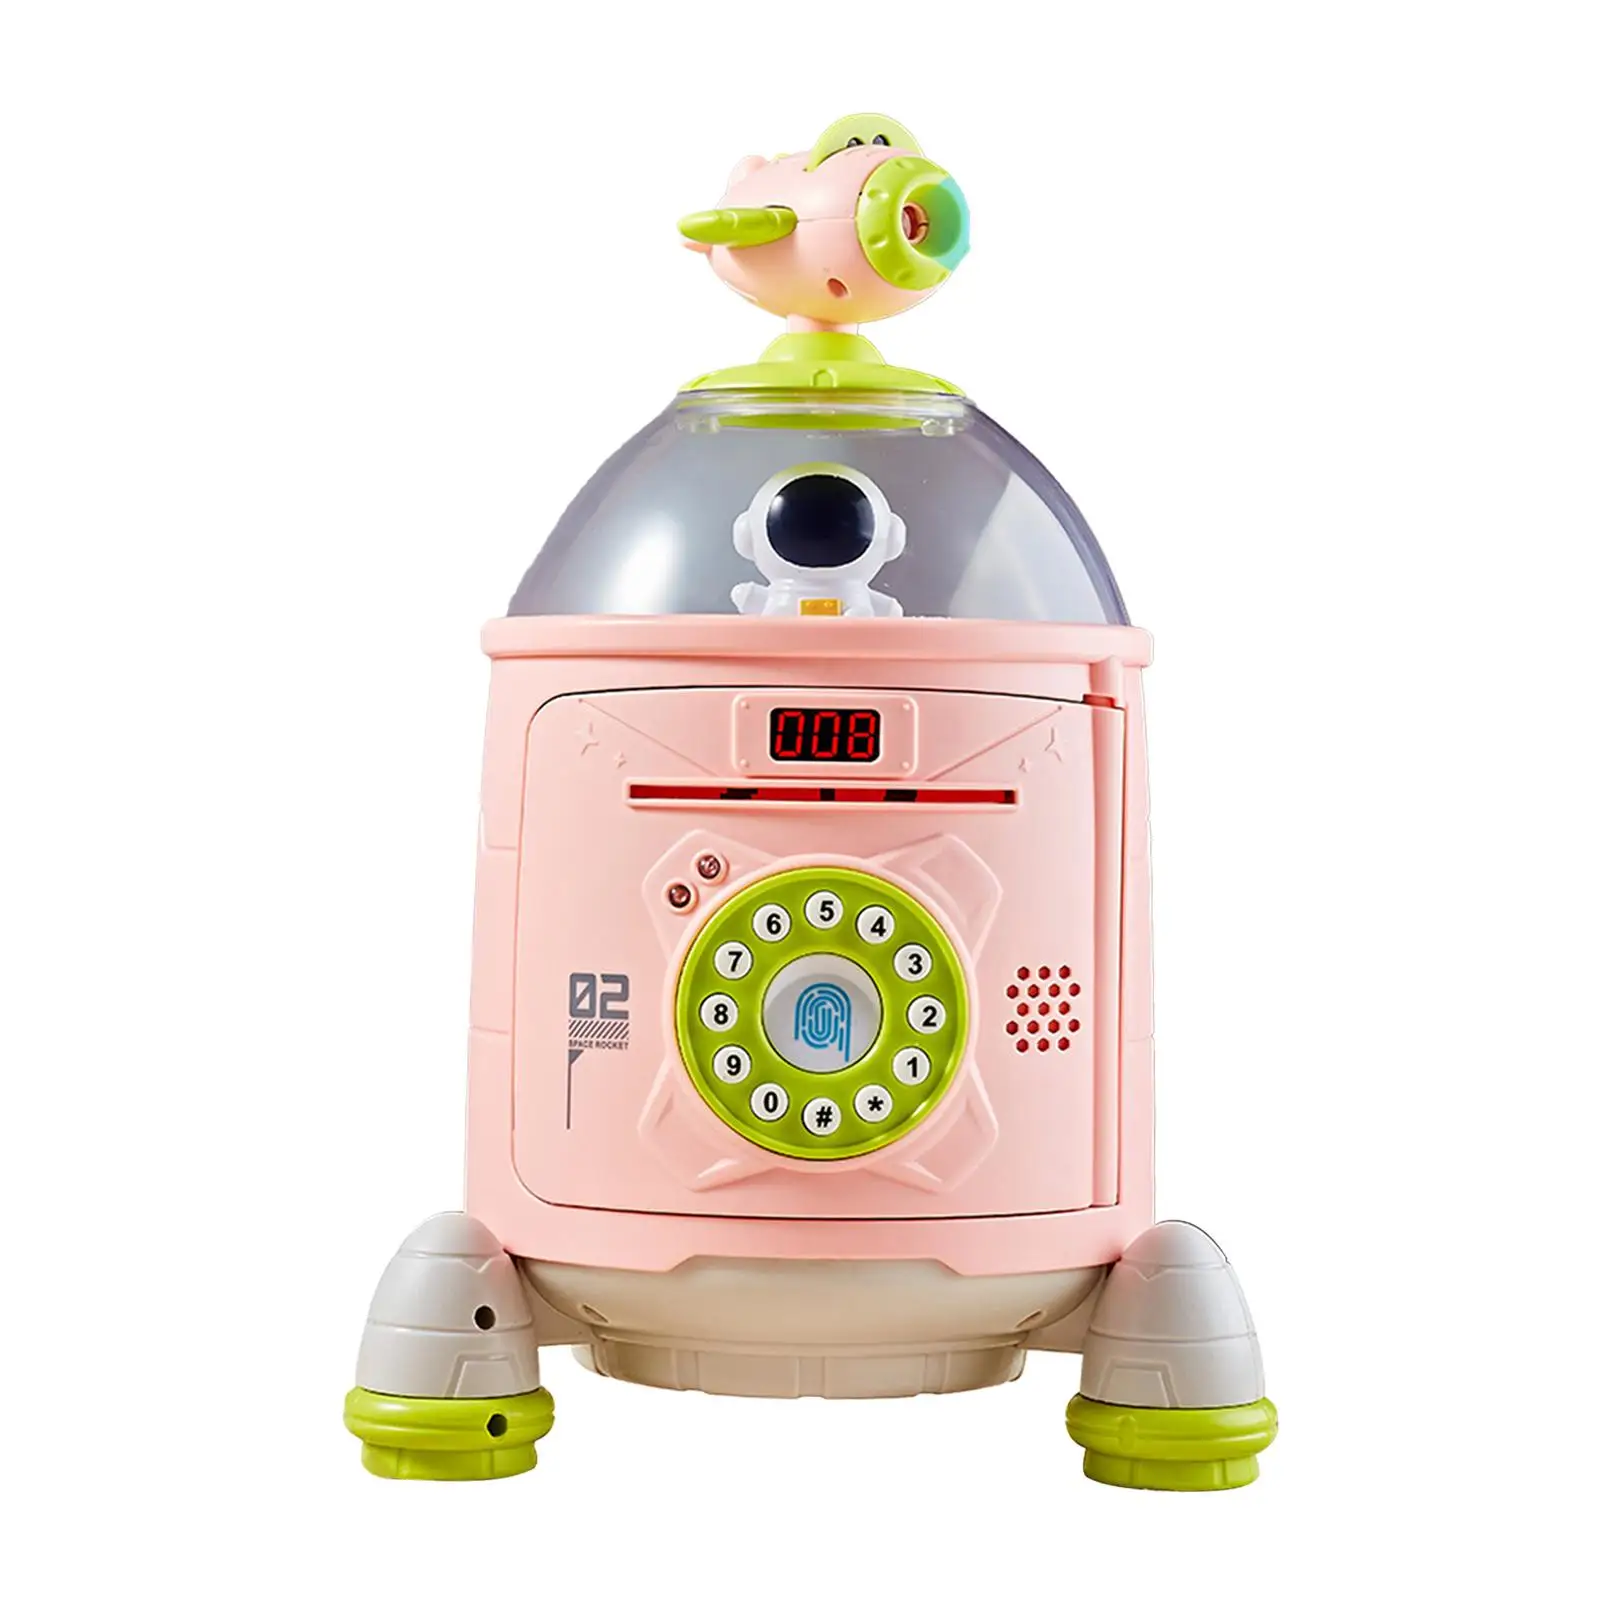 Rocket Piggy Bank Learning Toy Money Box for Girls Boys Age 2+ Children